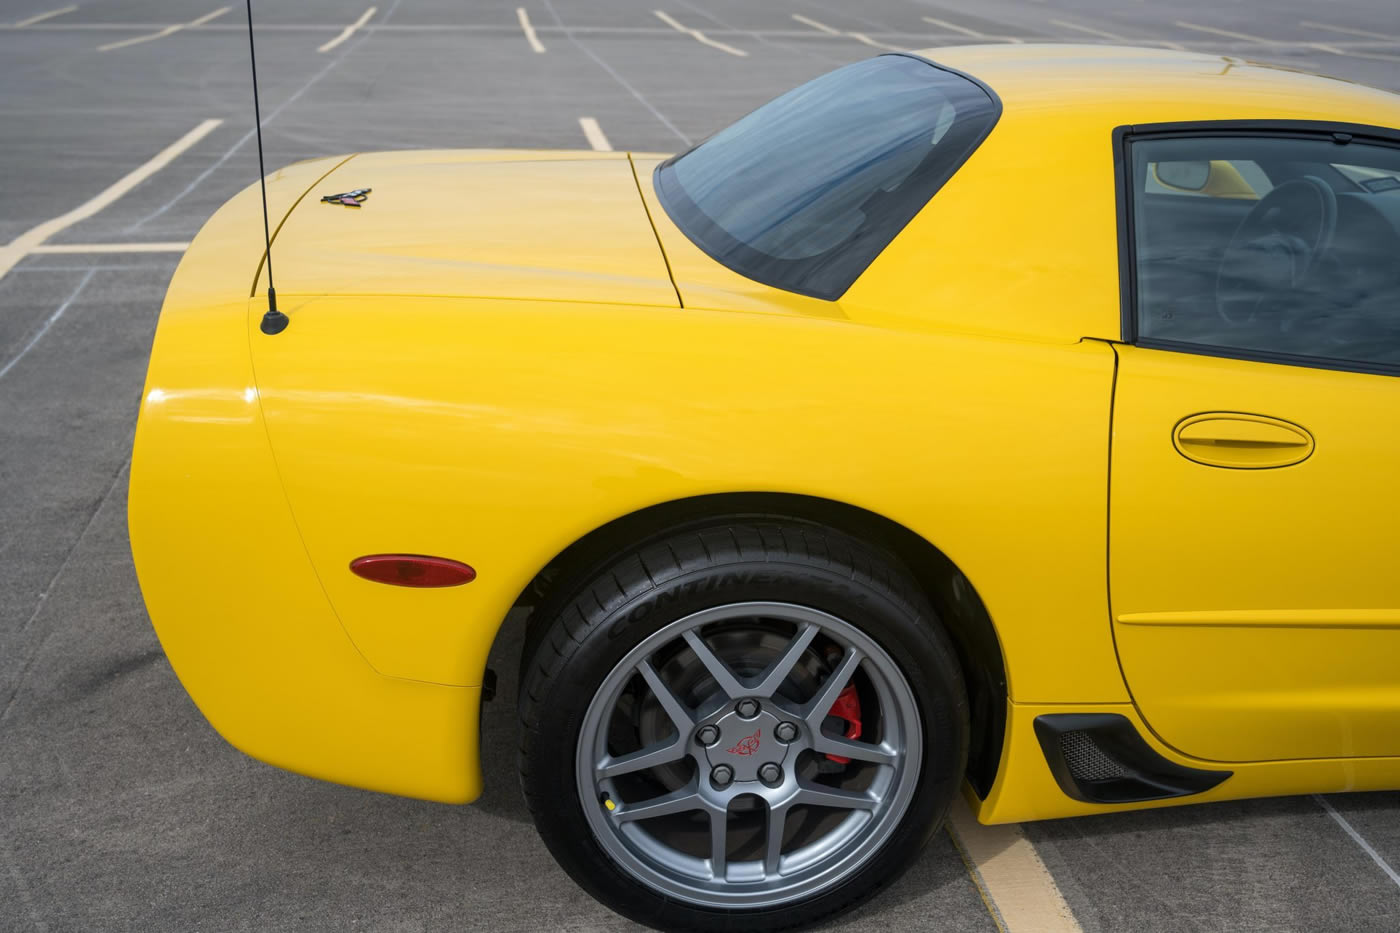 2001 Corvette Z06 in Millennium Yellow